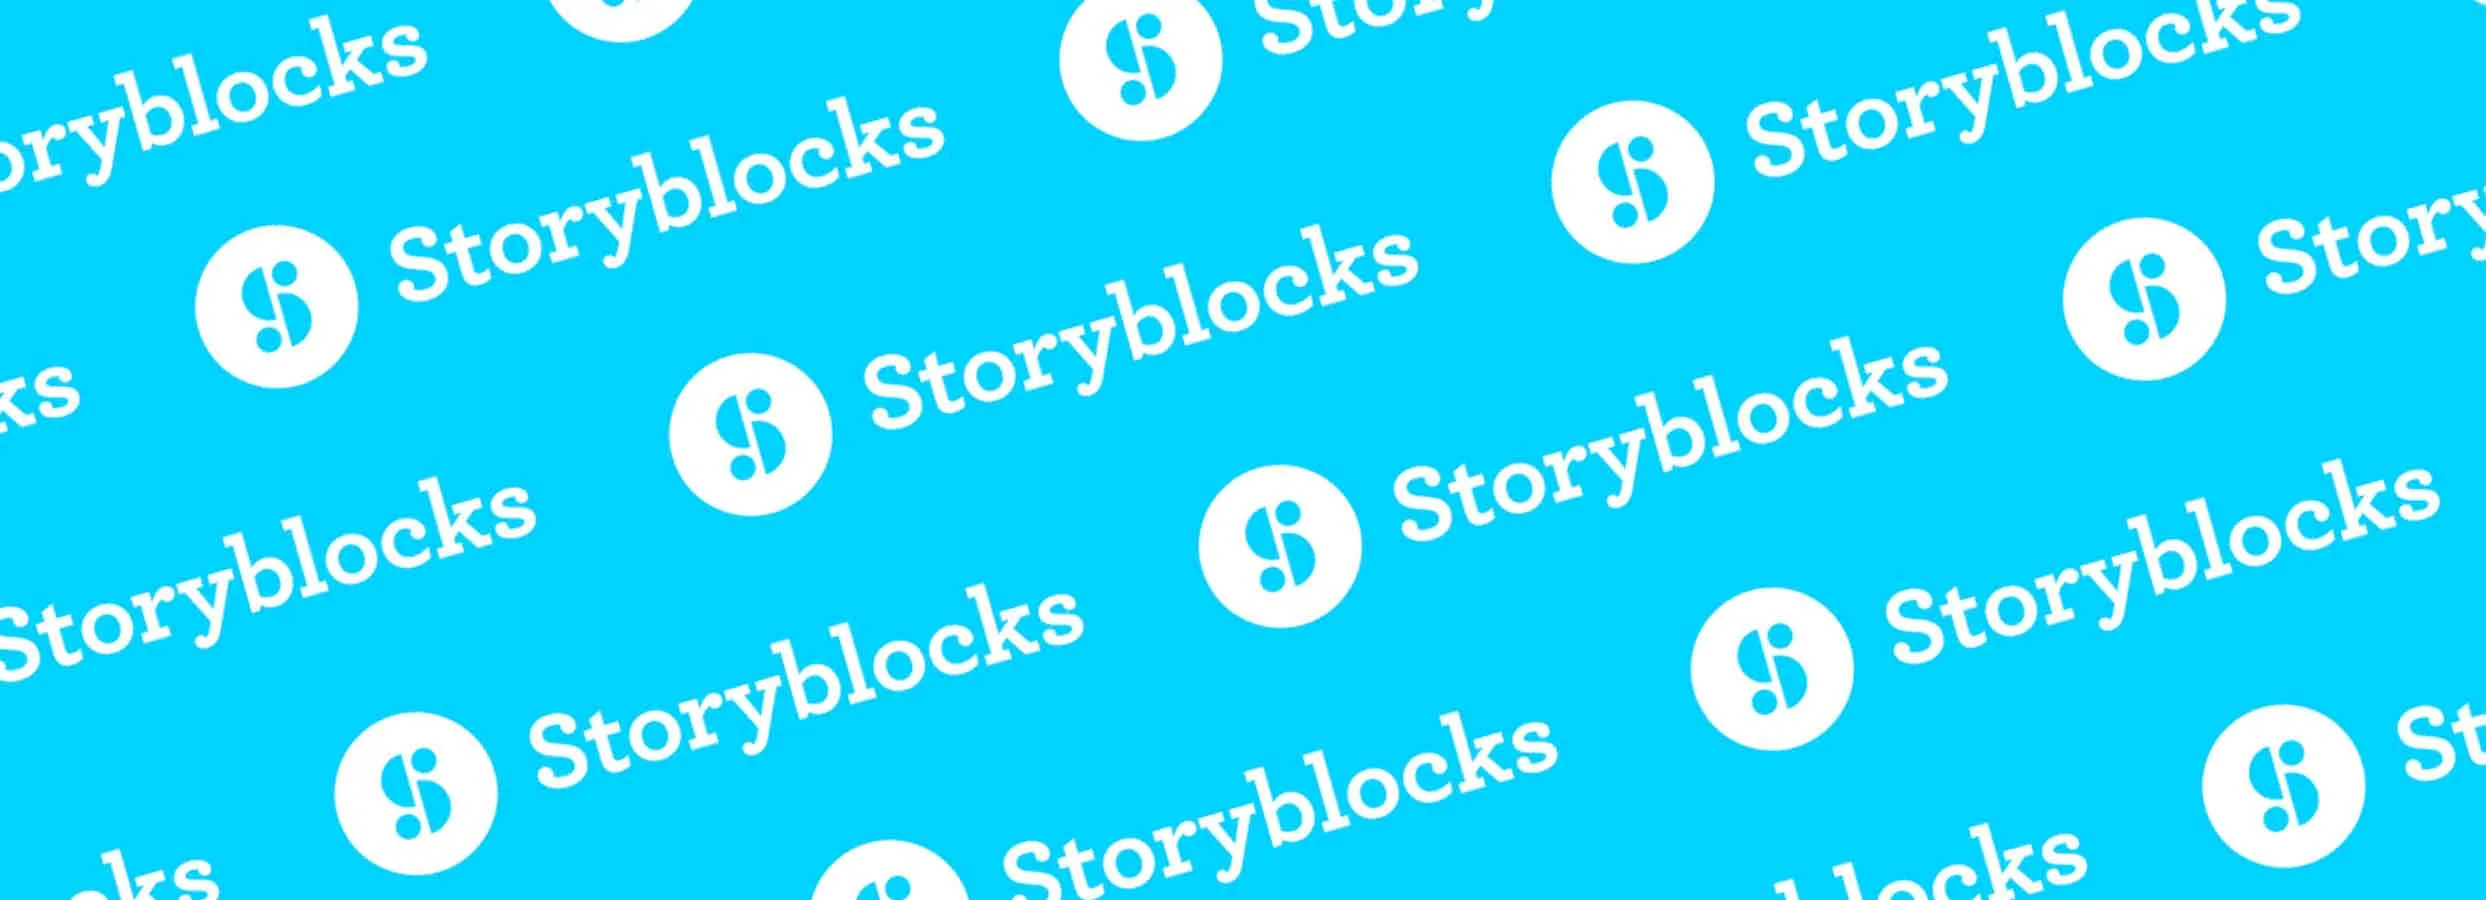 Storyblocks